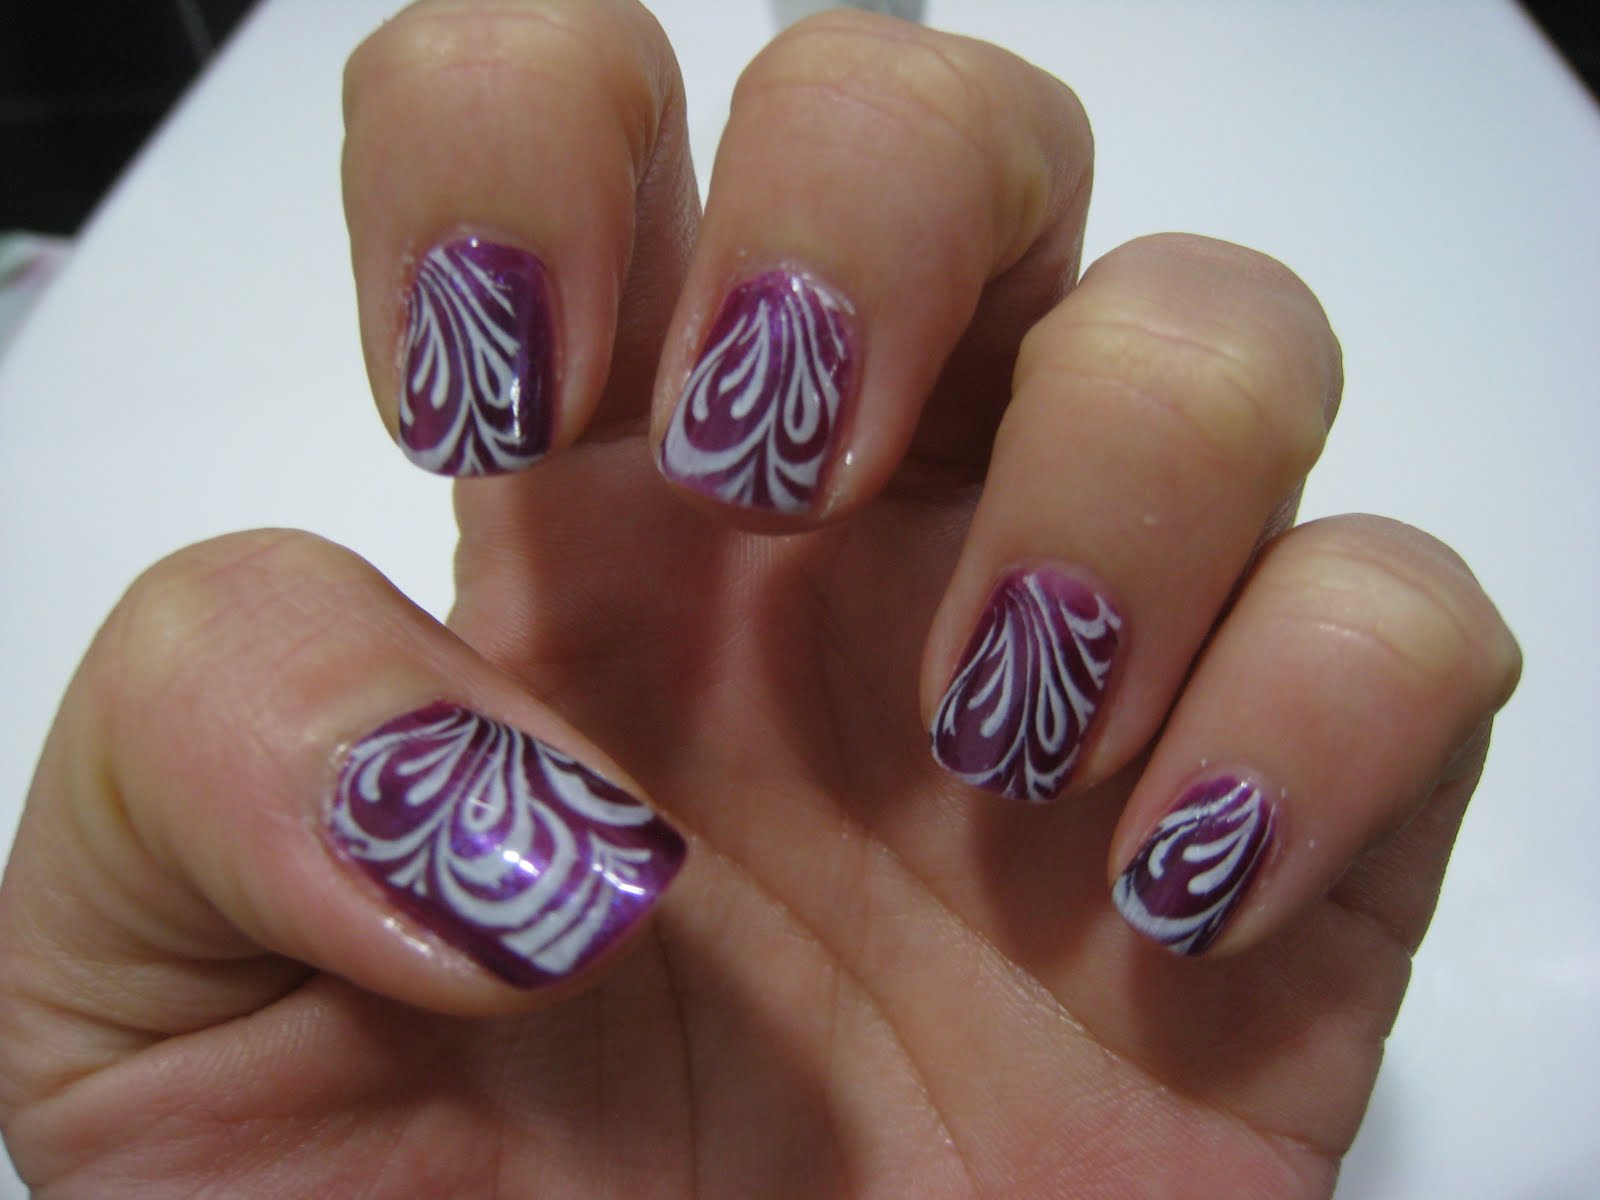 2. Konad Stamping Nail Art Designs - wide 9